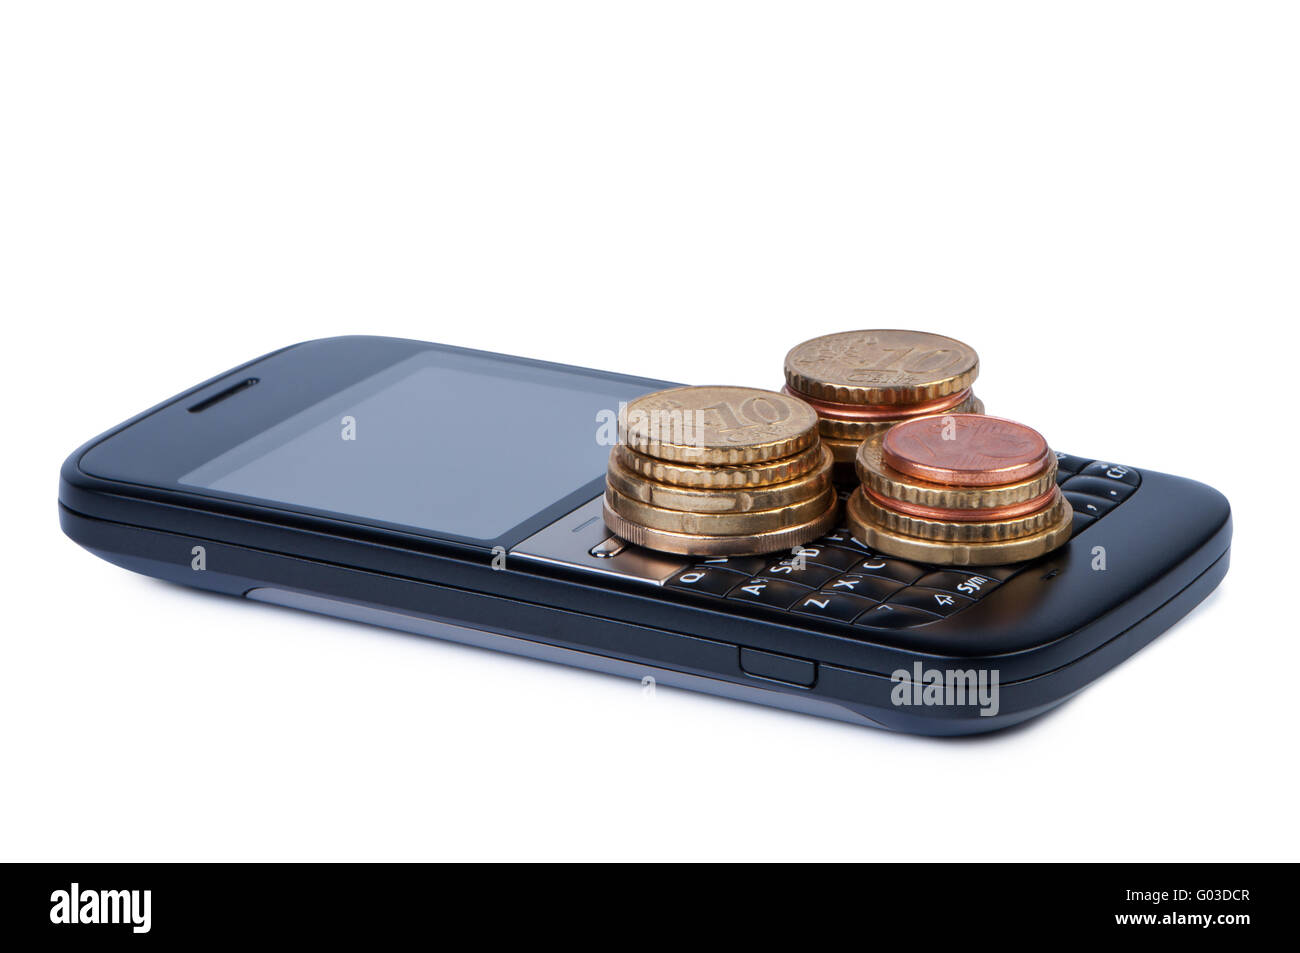 Teléfono celular con monedas. Concepto de pagos y ahorros. Foto de stock